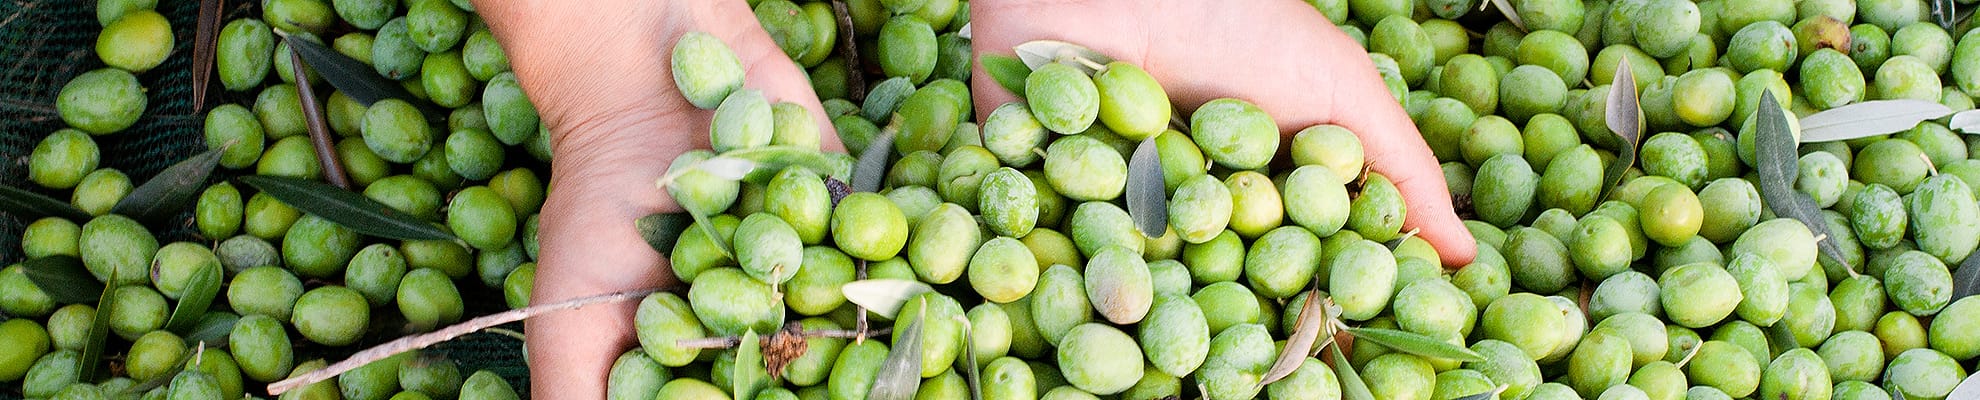 Le olive raccolta a mano